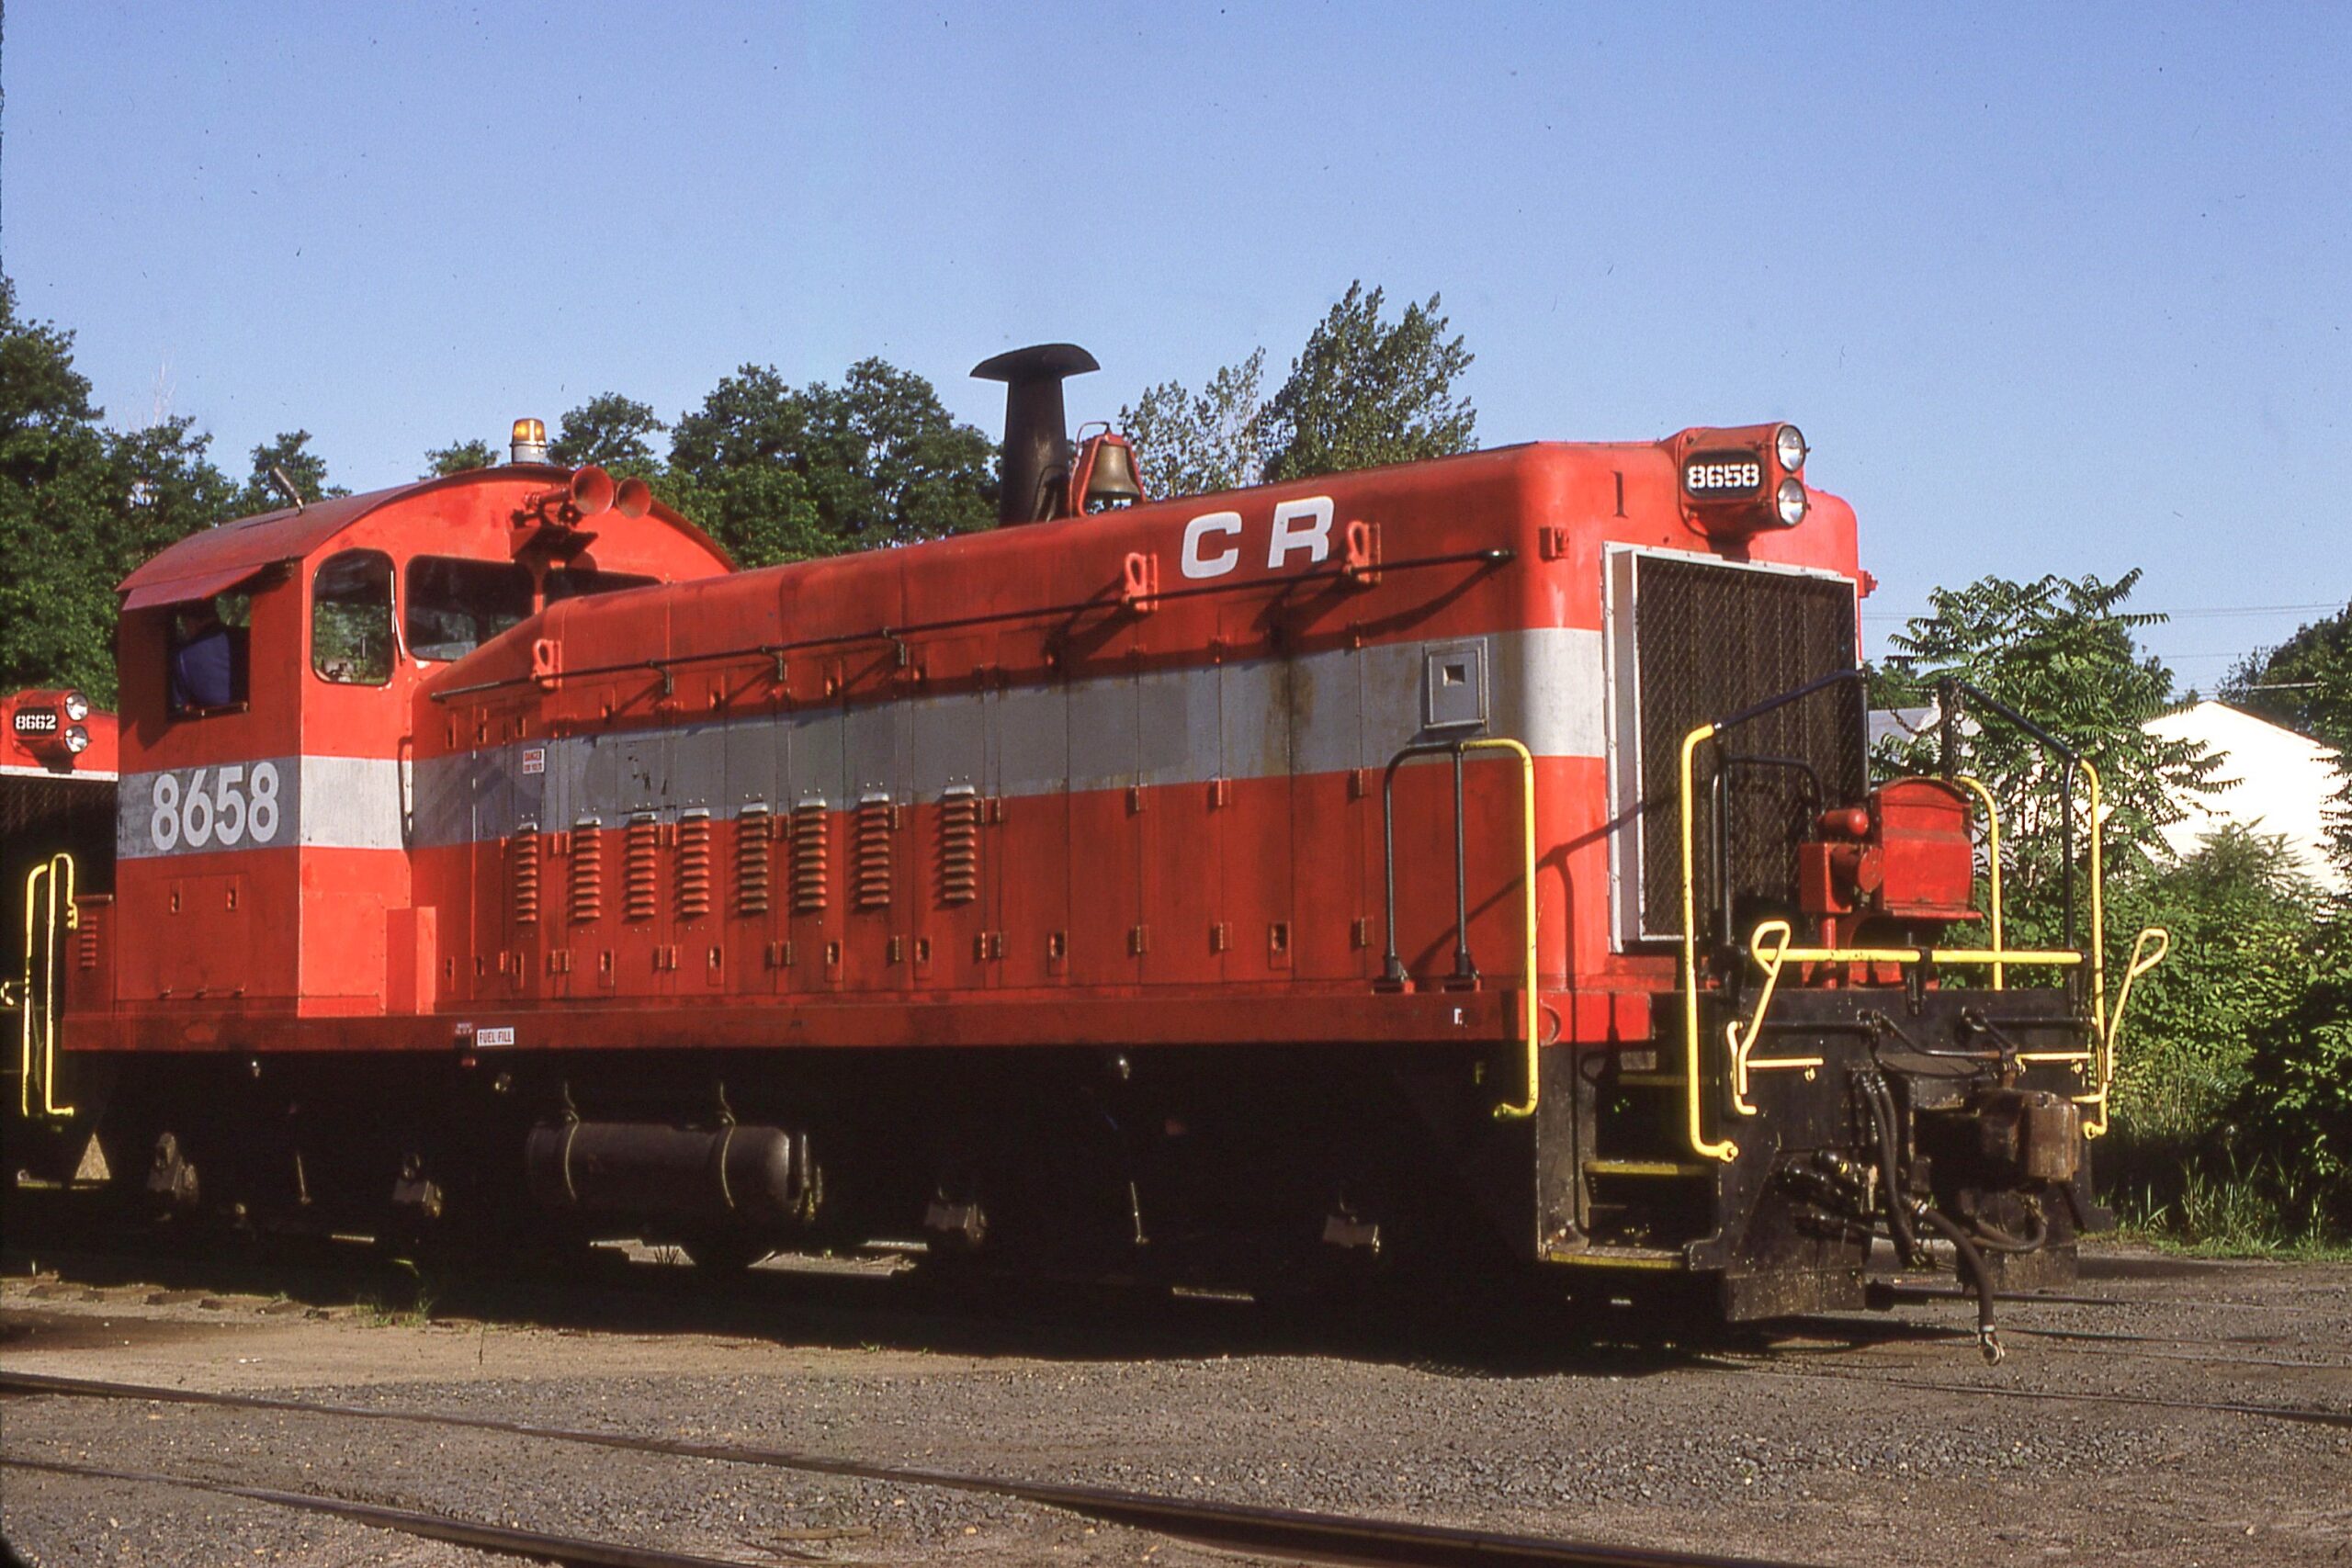 Conrail | South Amboy, New Jersey | EMD Class SW9 #8658 diesel locomotive | ex Raritan River Railroad | June 1980 | Jack DeRosset photograph | Morning Sun Books Collection